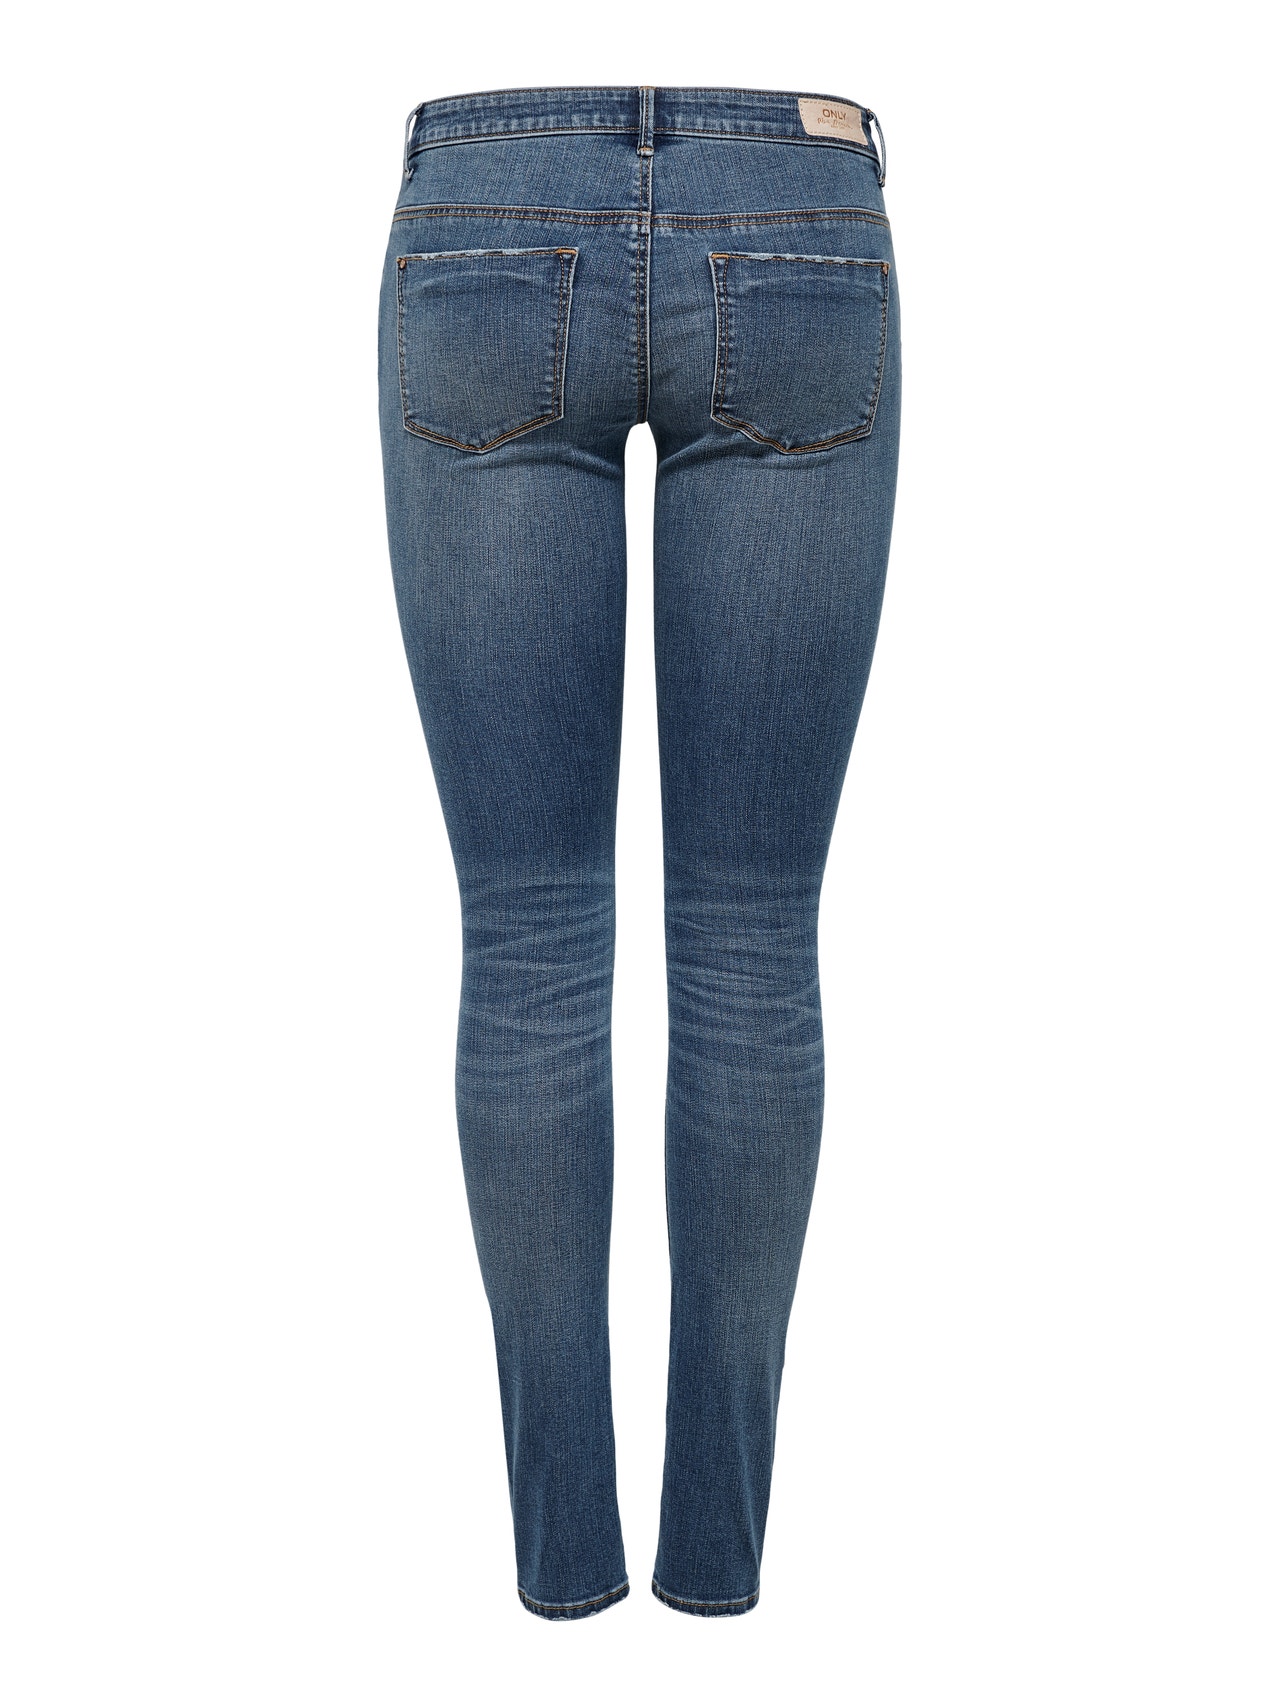 ONLY Skinny Fit Super low waist Jeans -Dark Blue Denim - 15185981